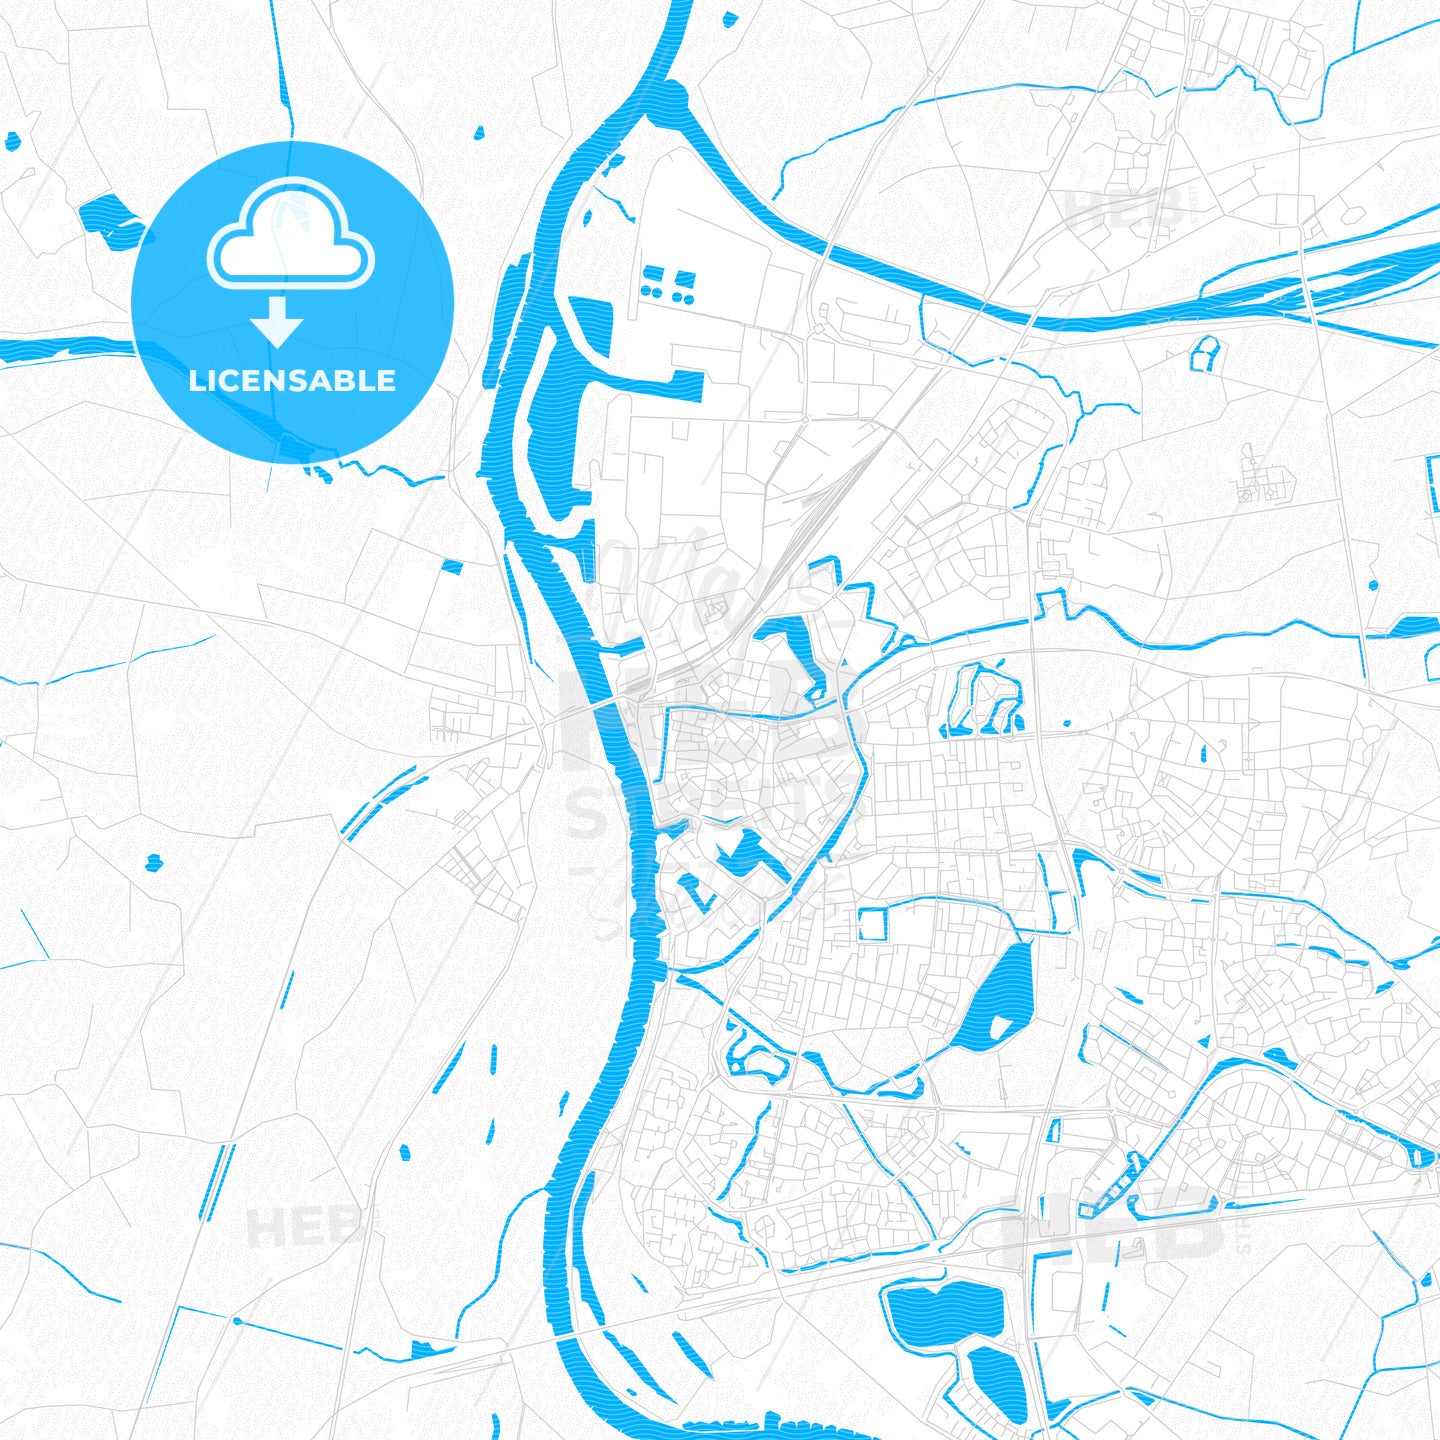 Zutphen, Netherlands PDF vector map with water in focus